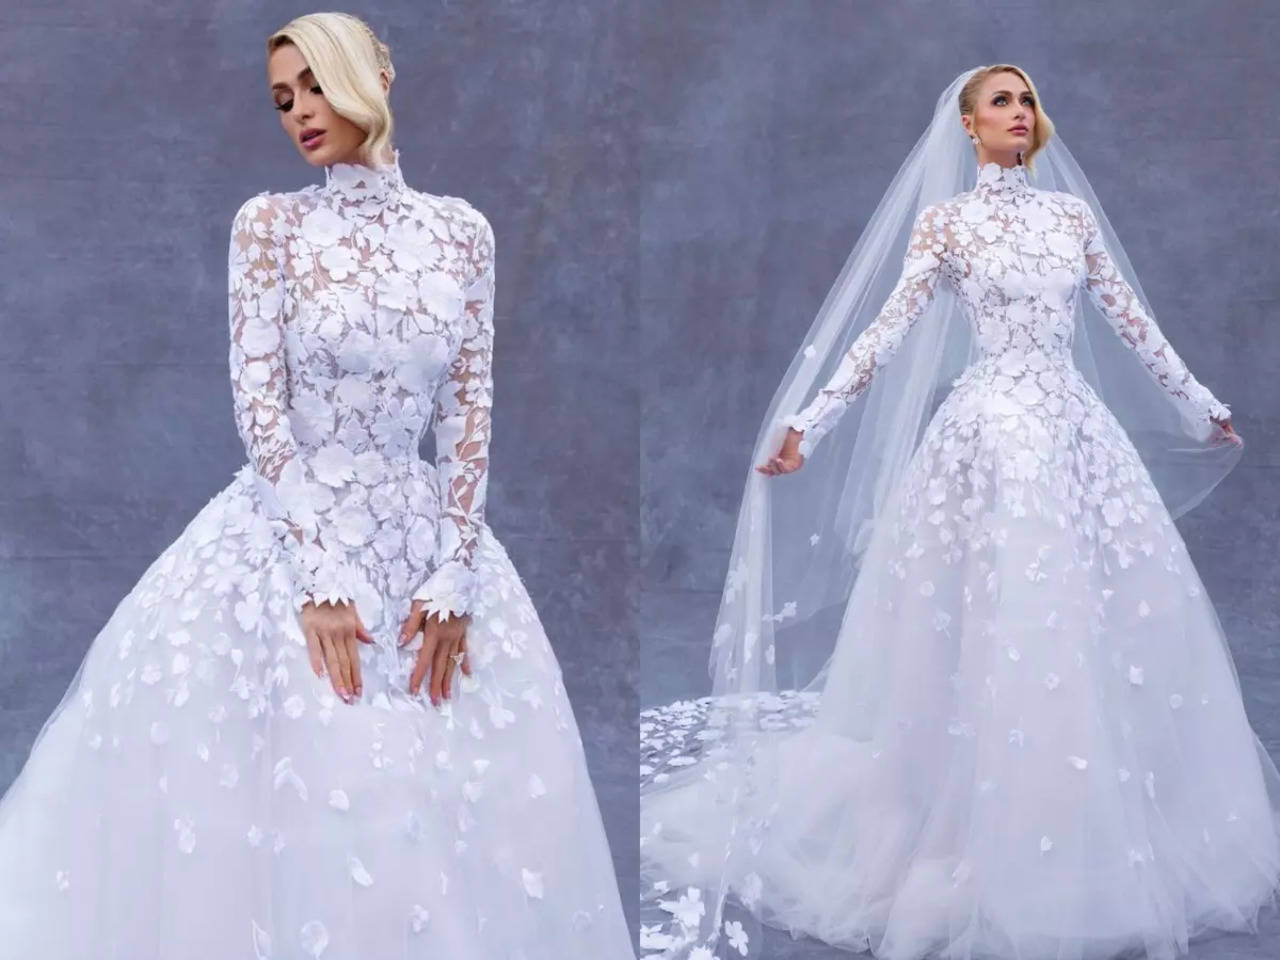 Paris Hilton marries in a fairytale lace gown